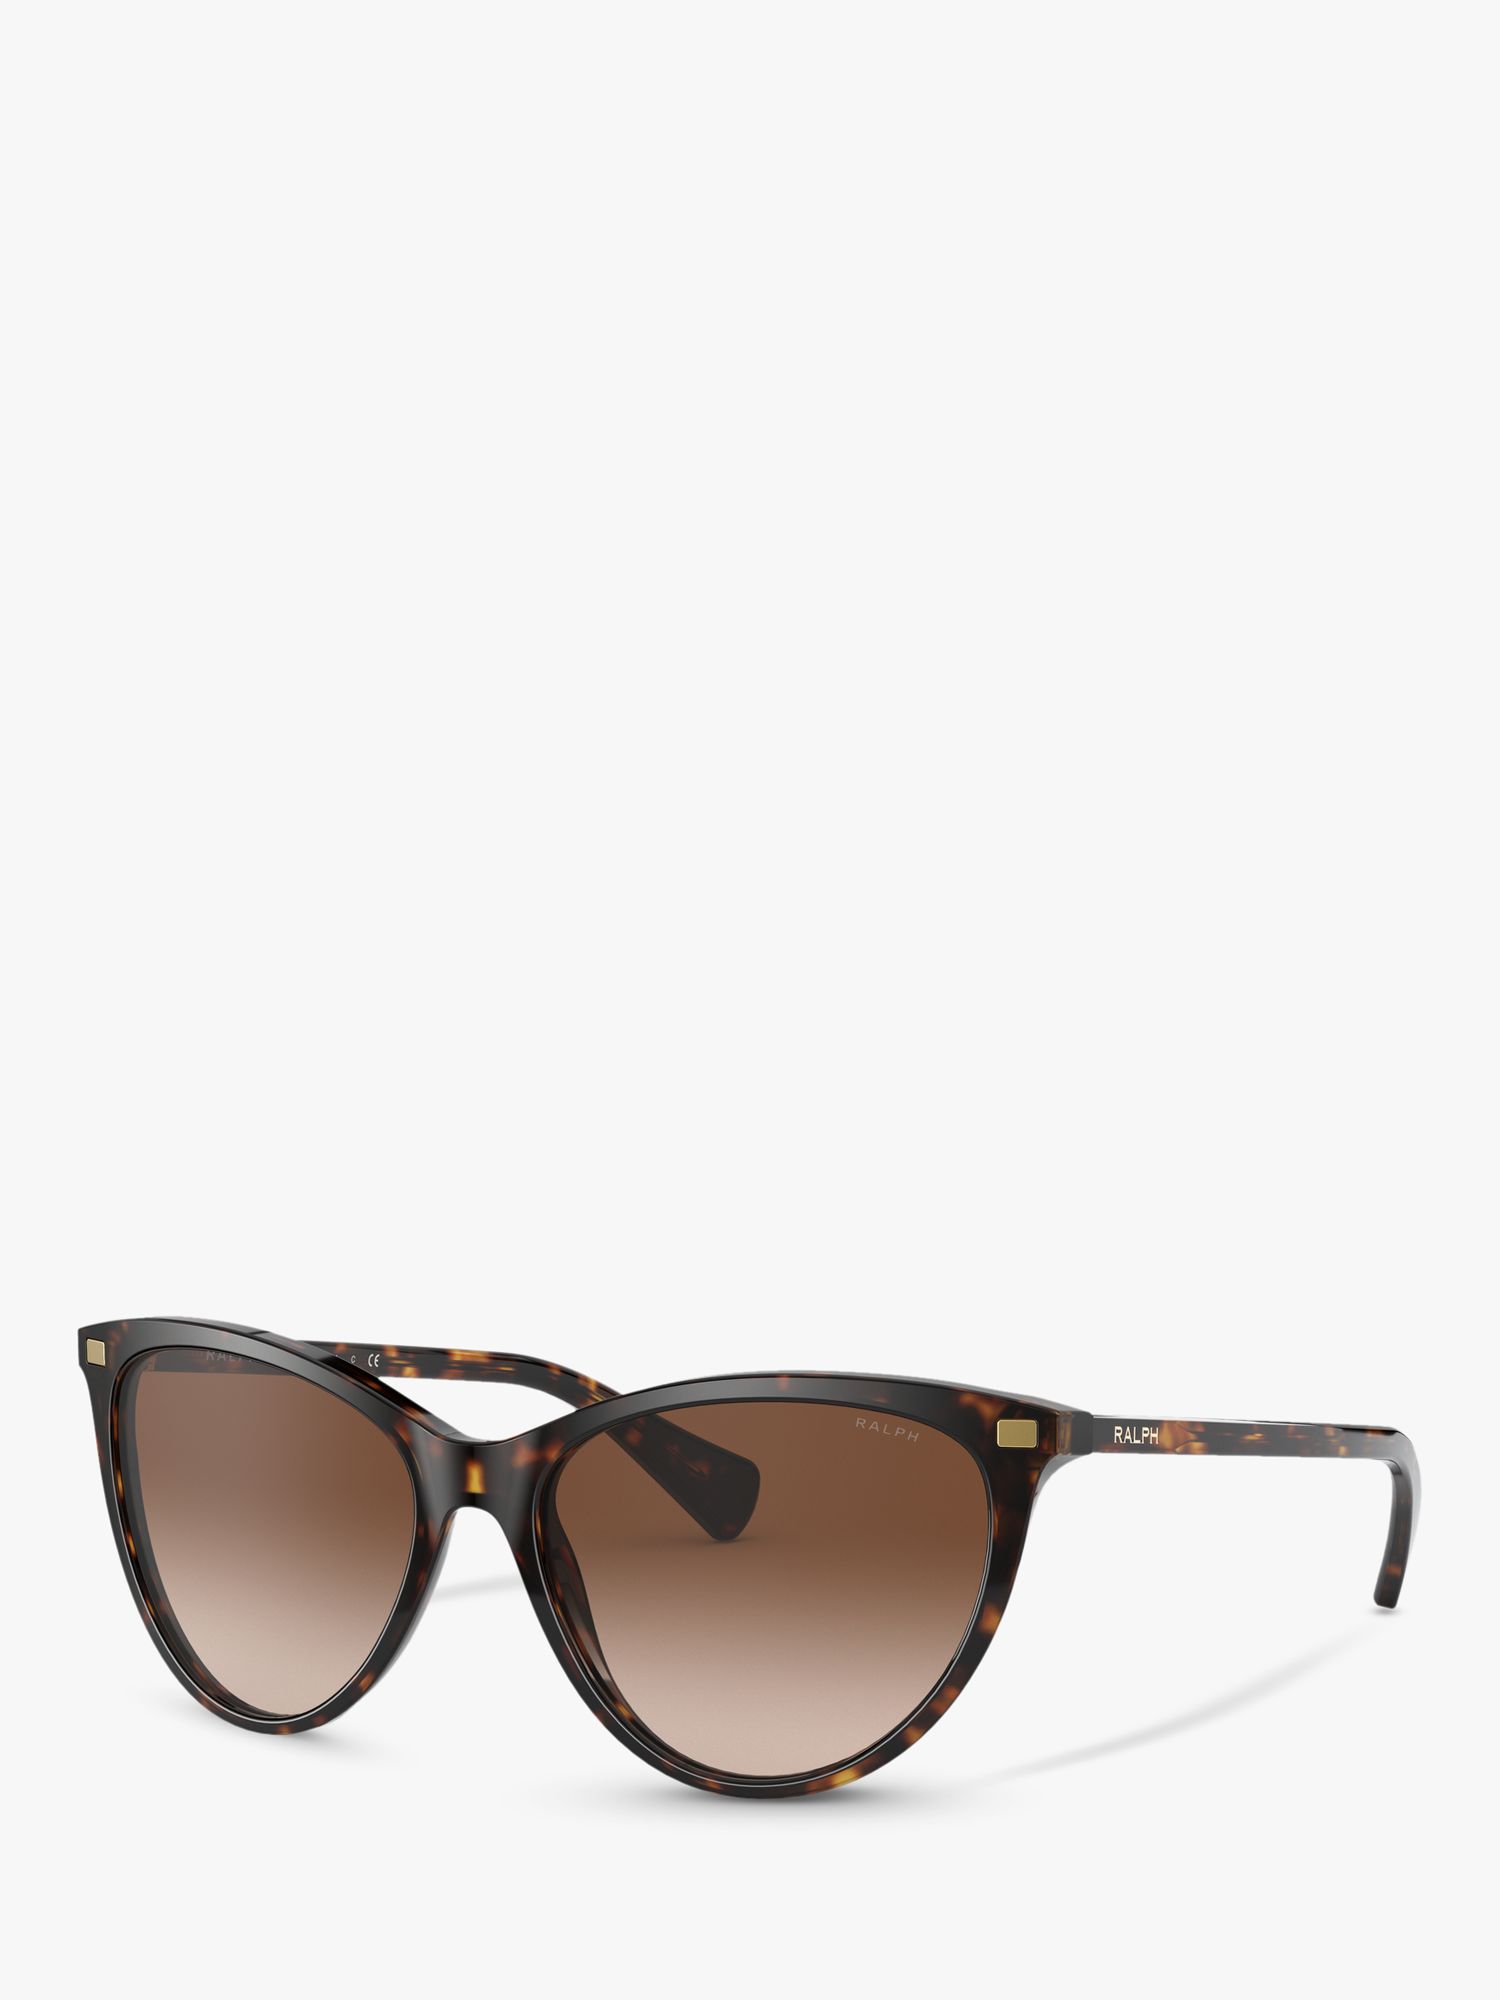 Ralph RA5270 Women's Spotted Tortoiseshell Butterfly Sunglasses, Gloss ...